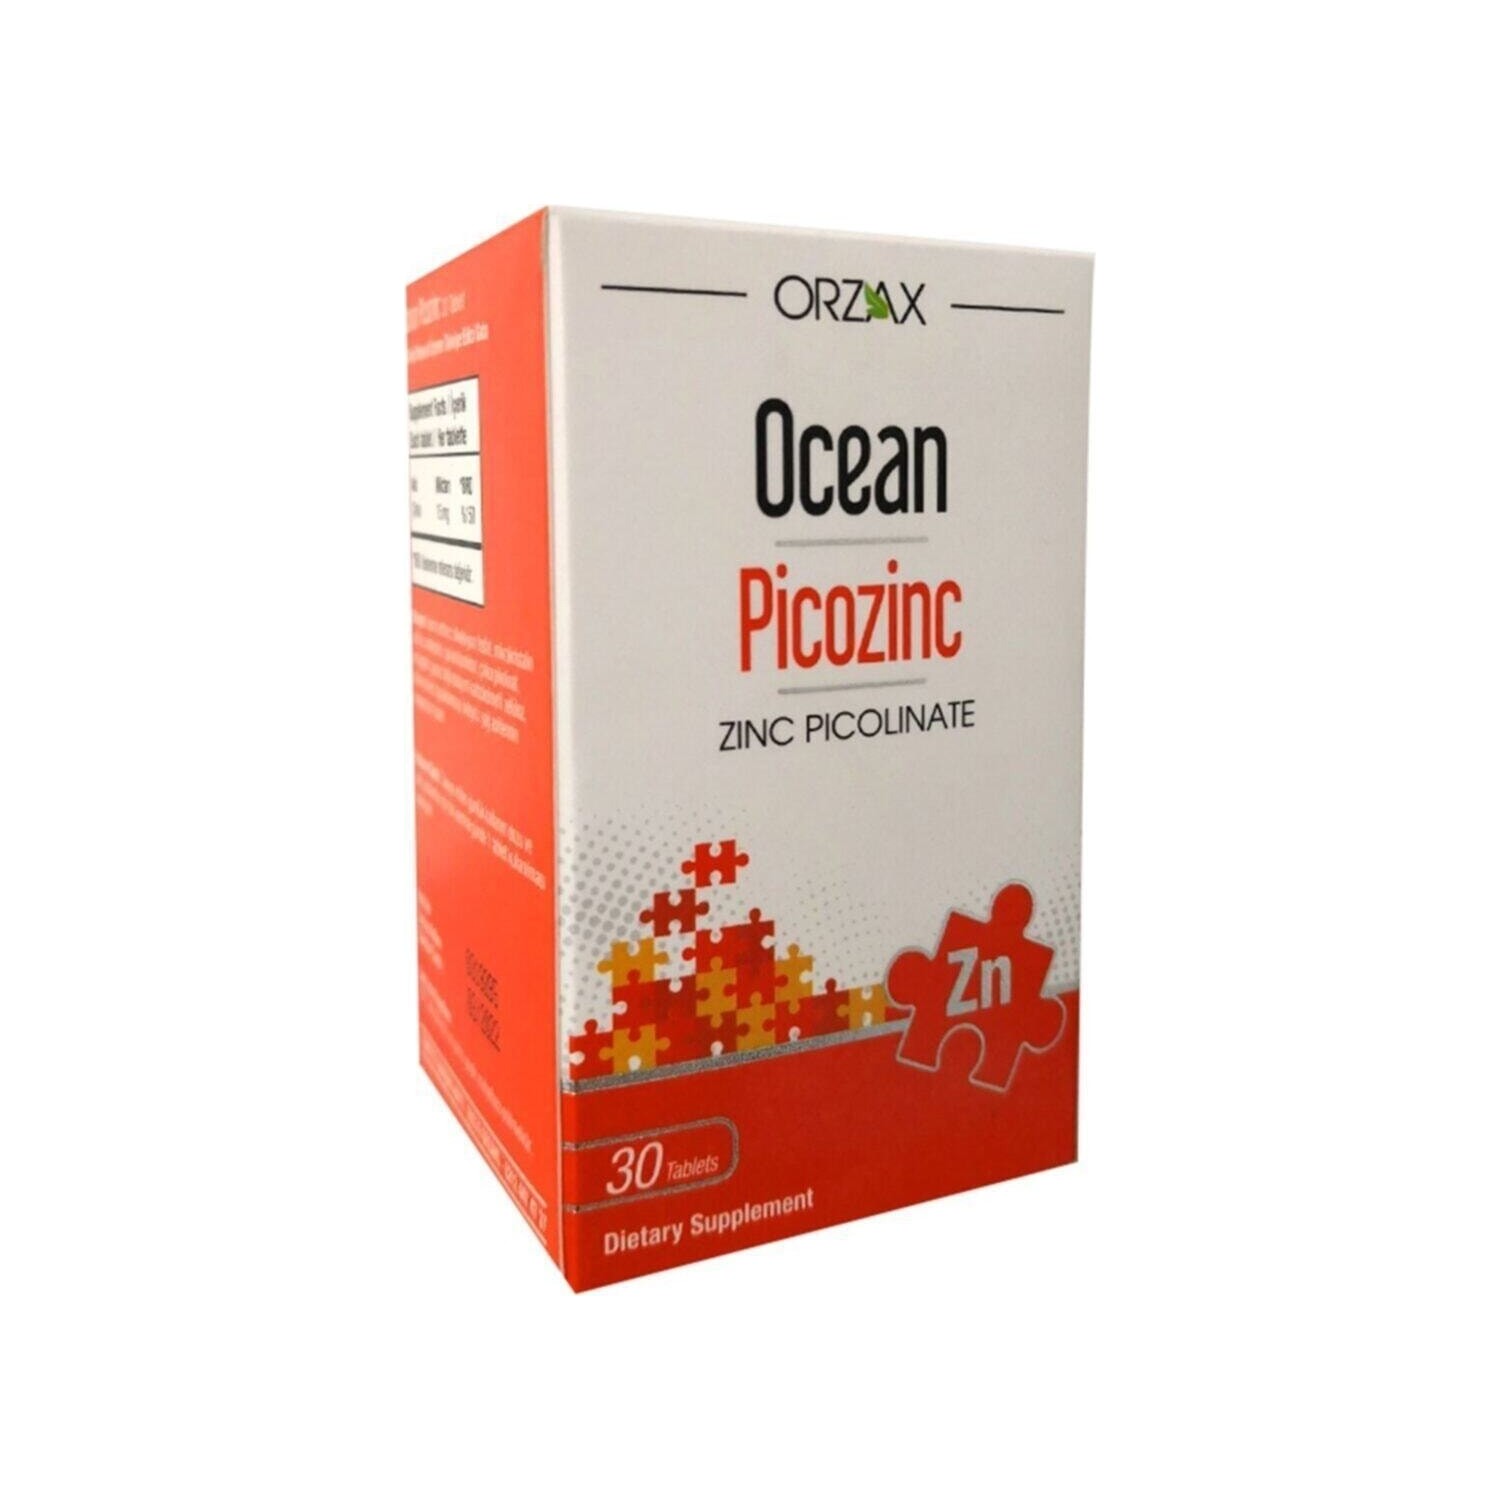 Пищевая добавка Ocean Picozinc Cinko Picolinate, 30 капсул пищевая добавка orzax ocean picozinc cinko picolinate 2 упаковки по 30 таблеток